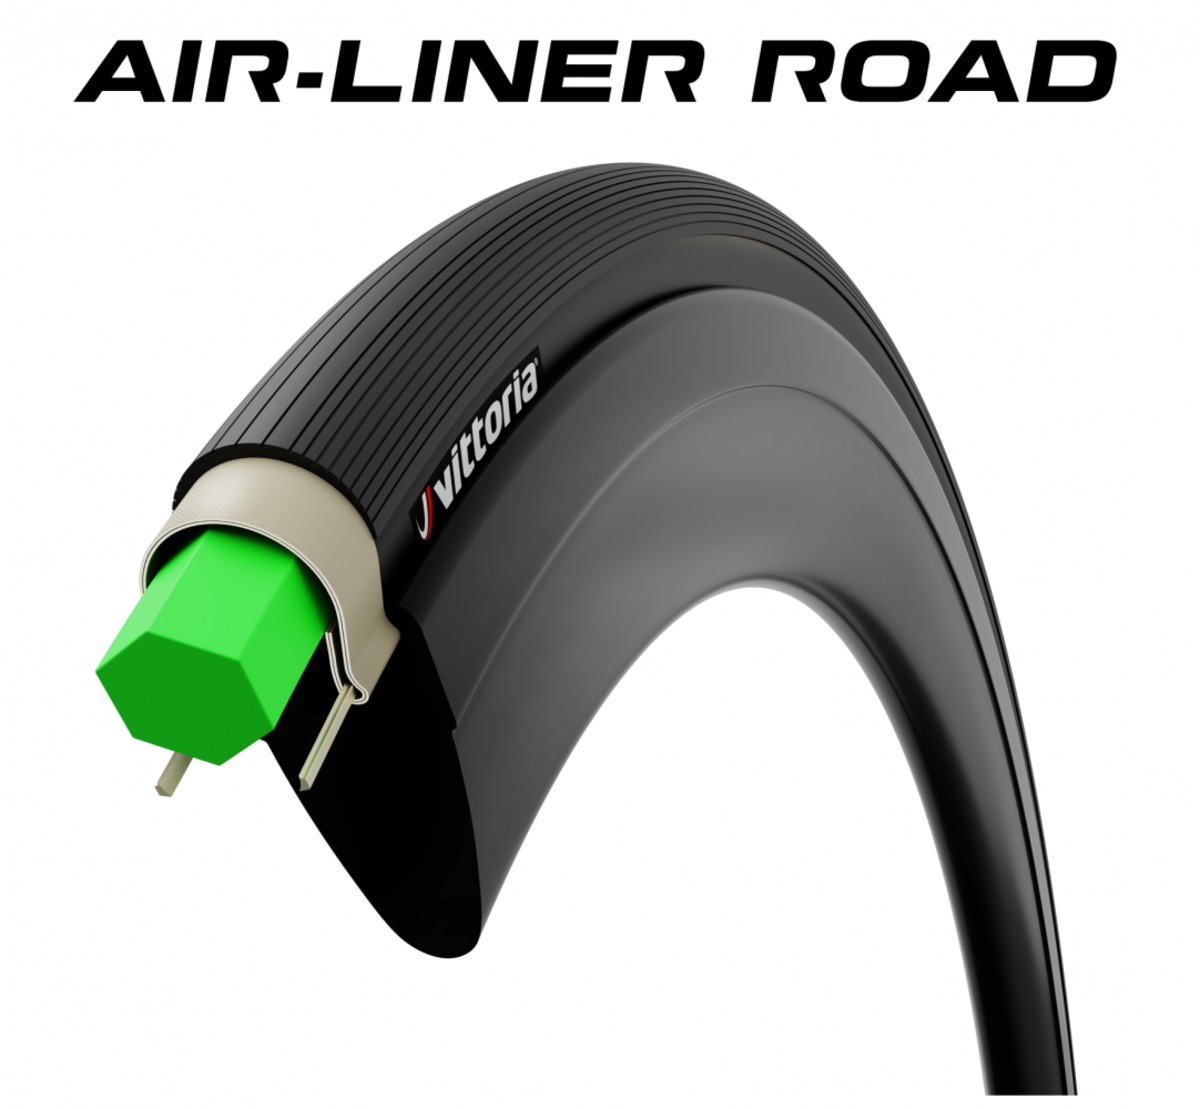 VITTORIA AIR-LINER ROAD | サイクルショップ マティーノ ウェブストア